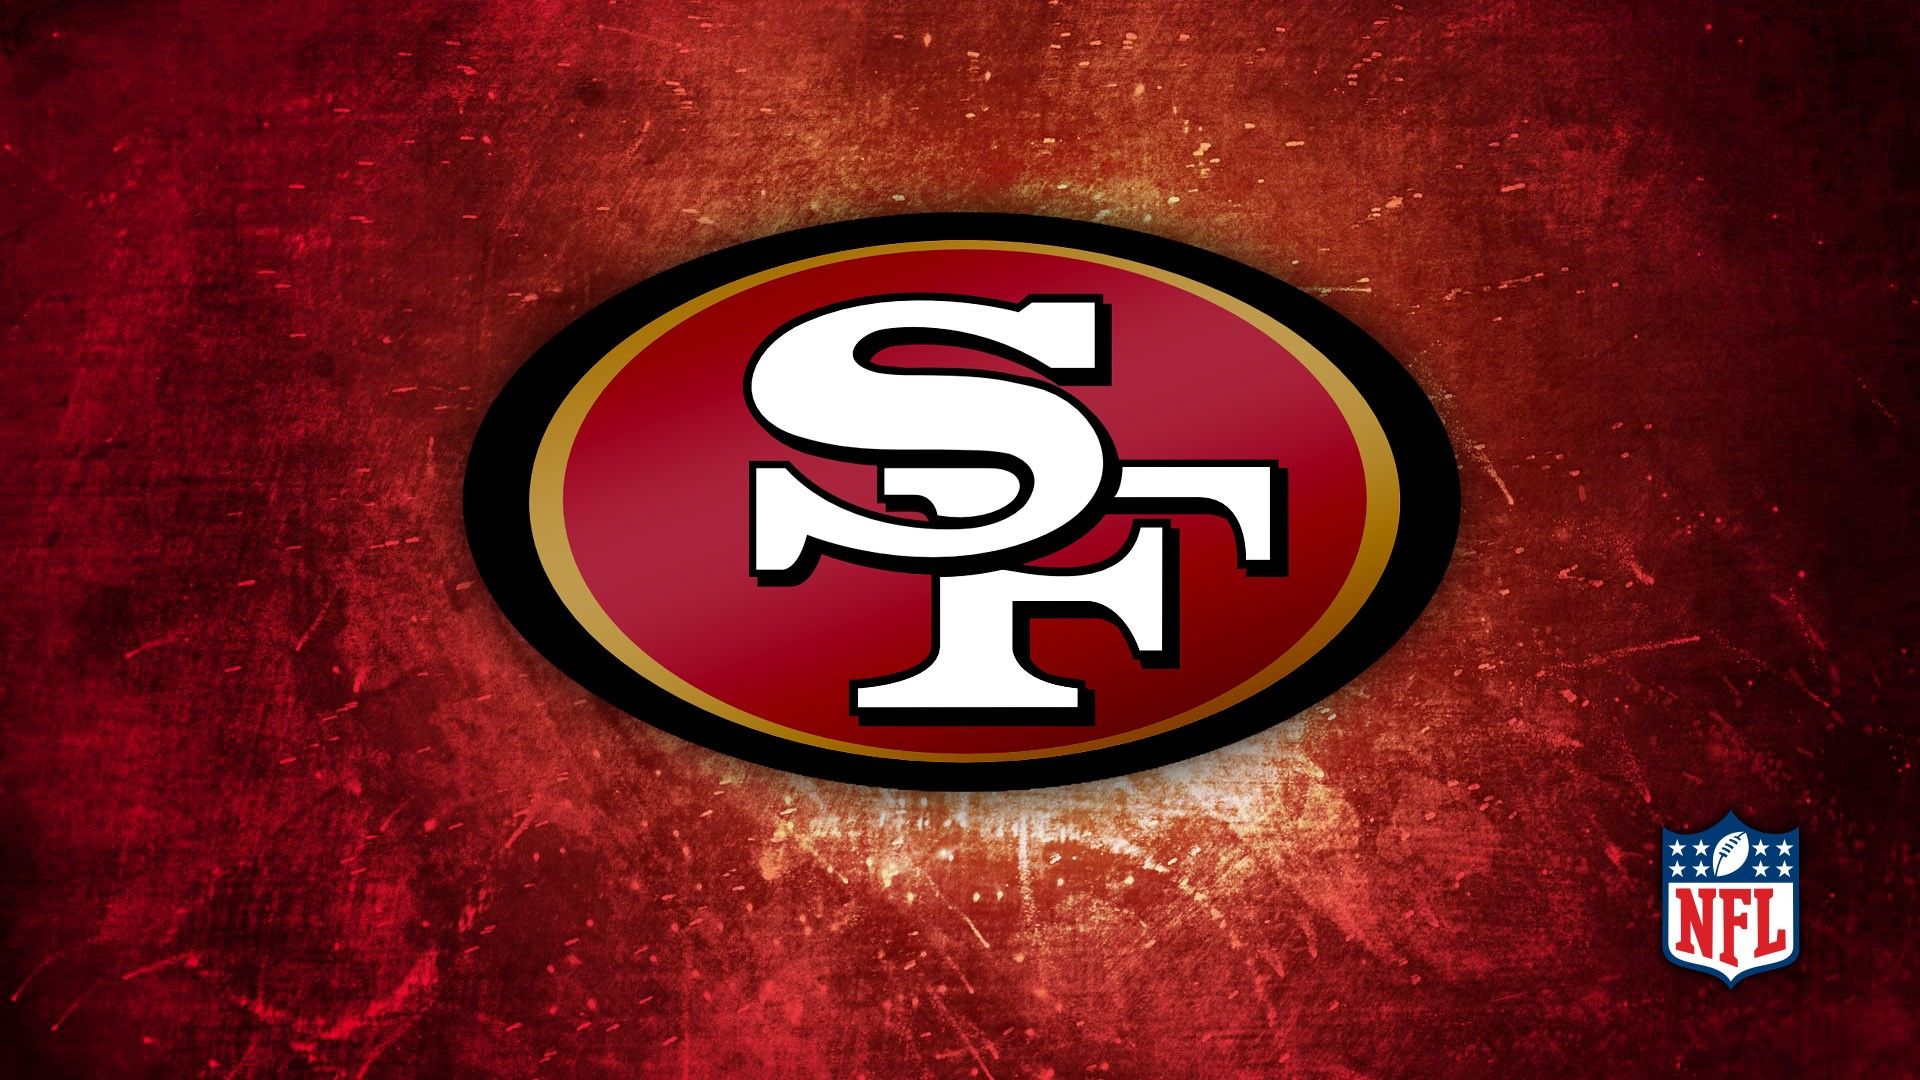 HD Background San Francisco 49ers NFL Football Wallpaper. San francisco 49ers logo, 49ers, Nfl football wallpaper